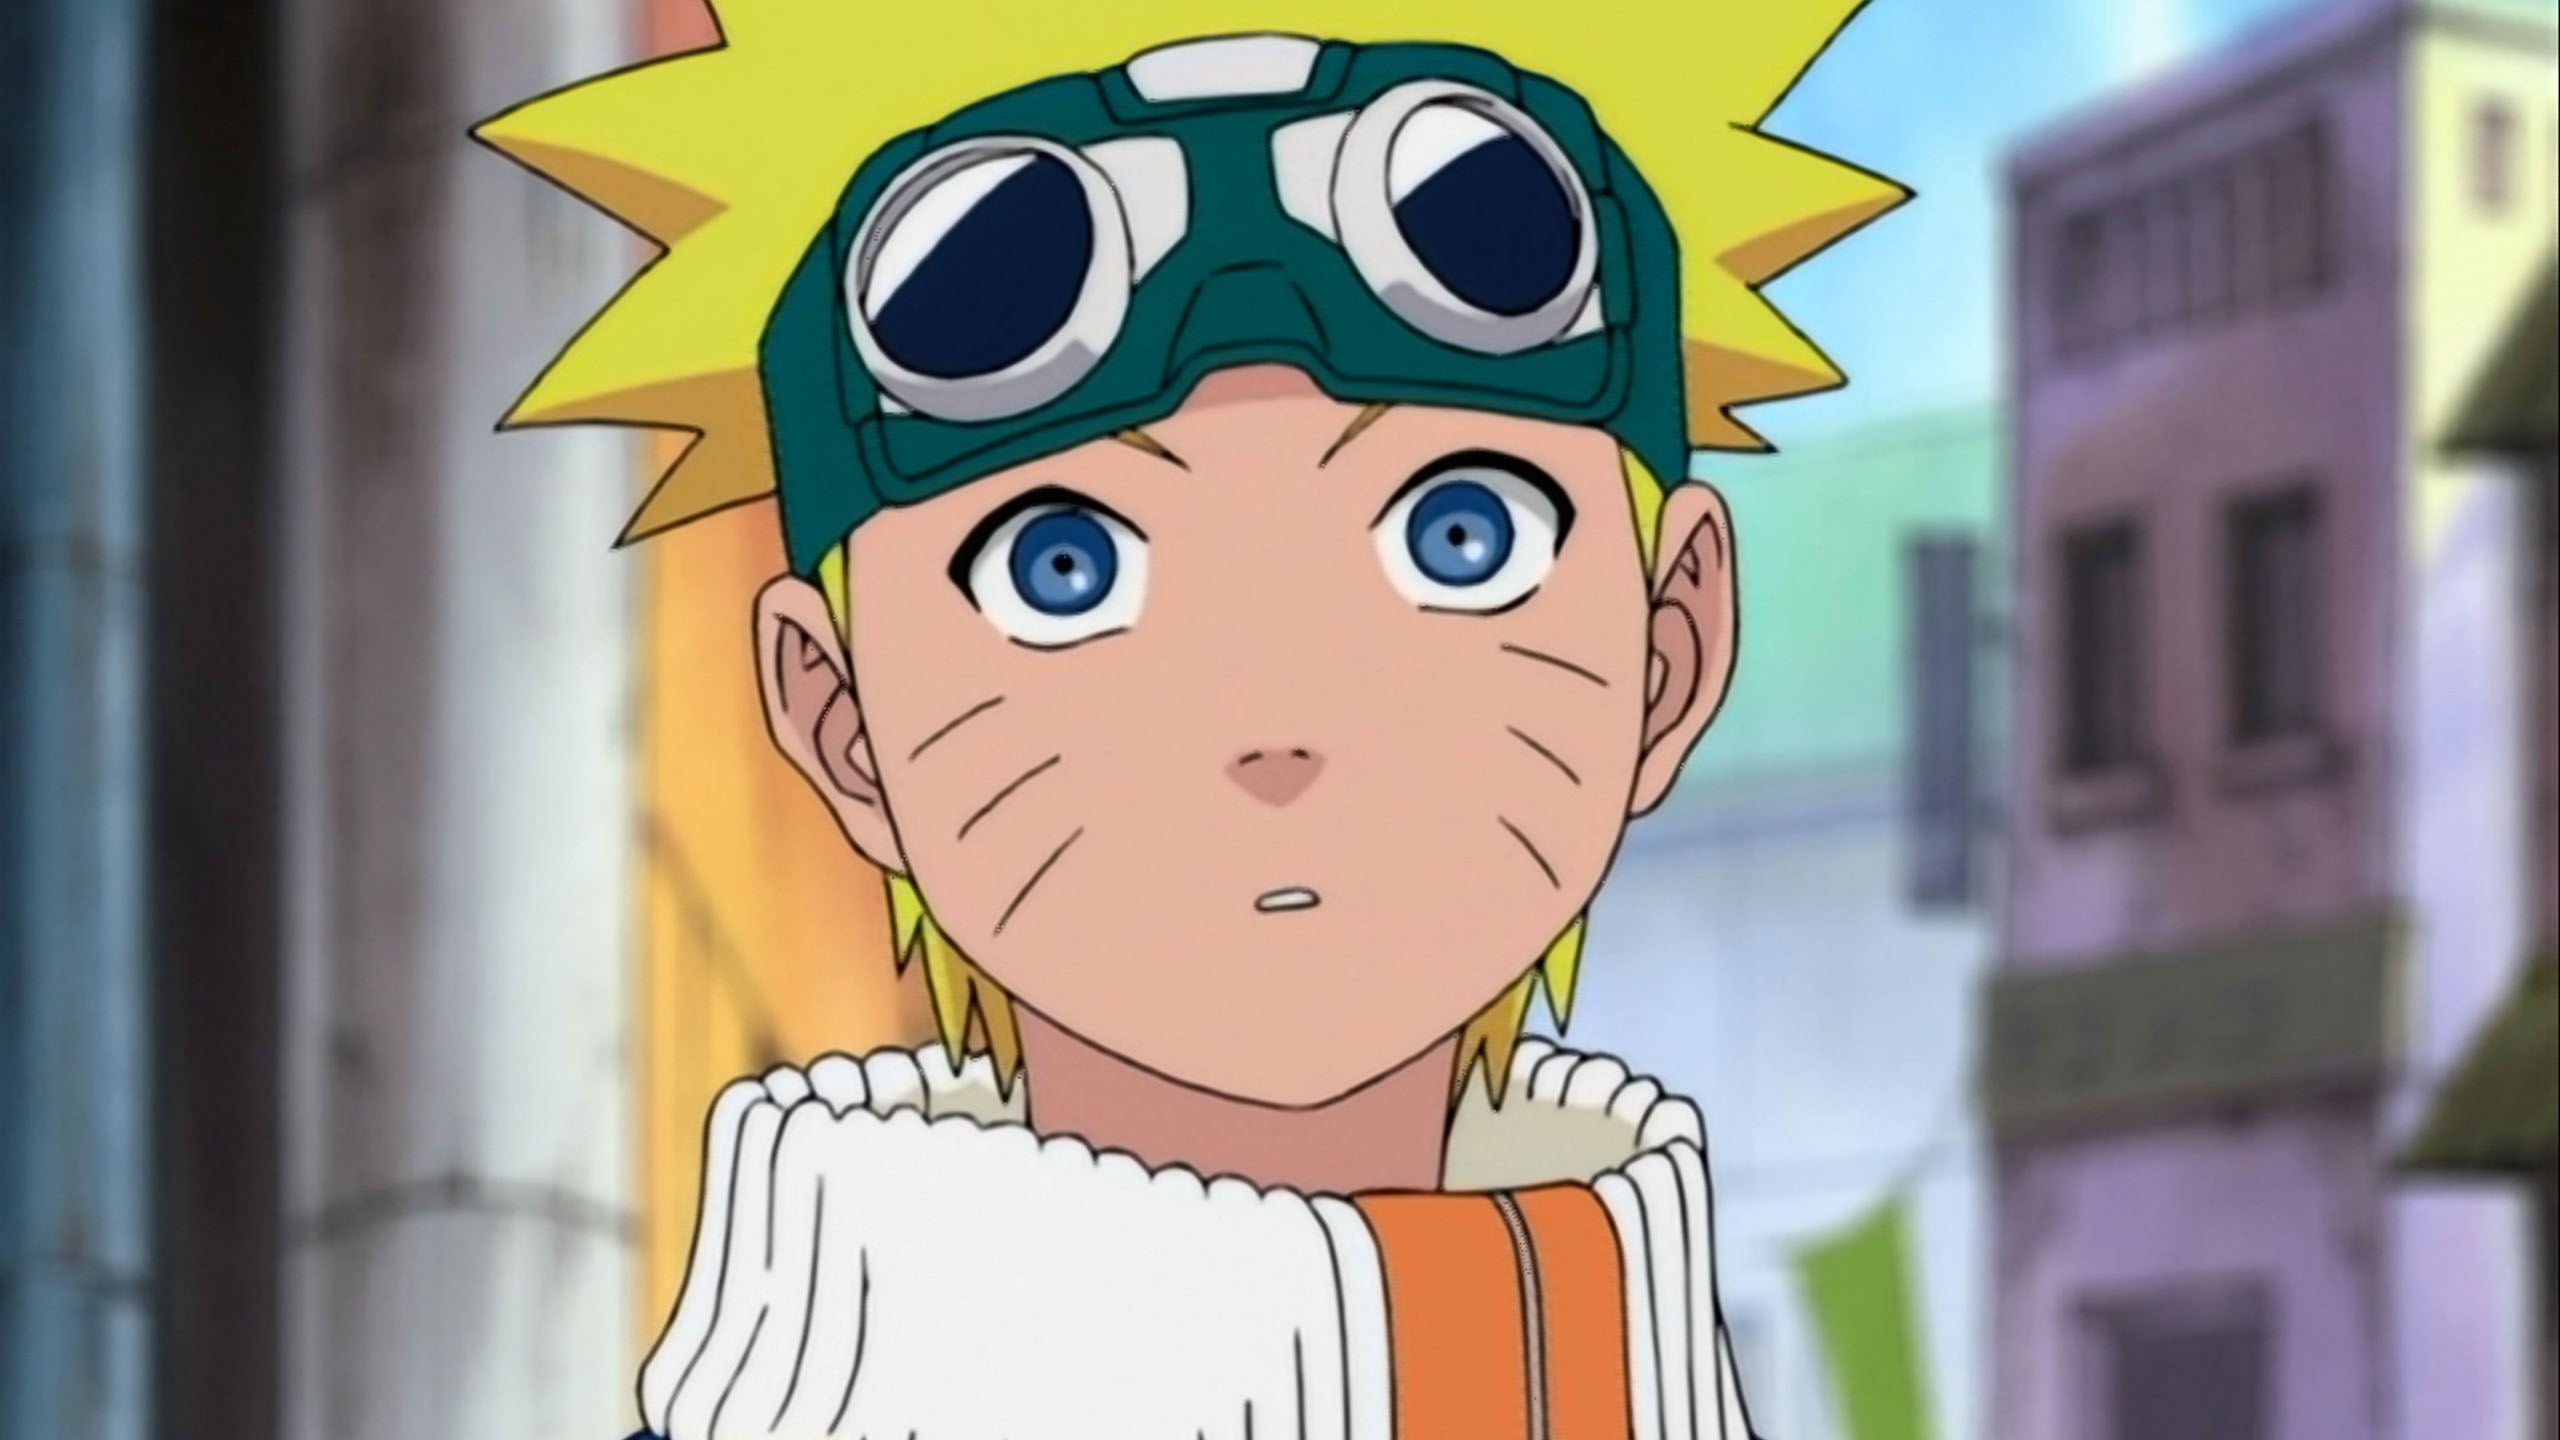 “Naruto” llega a HBO Max: ¿cuántos episodios están disponibles